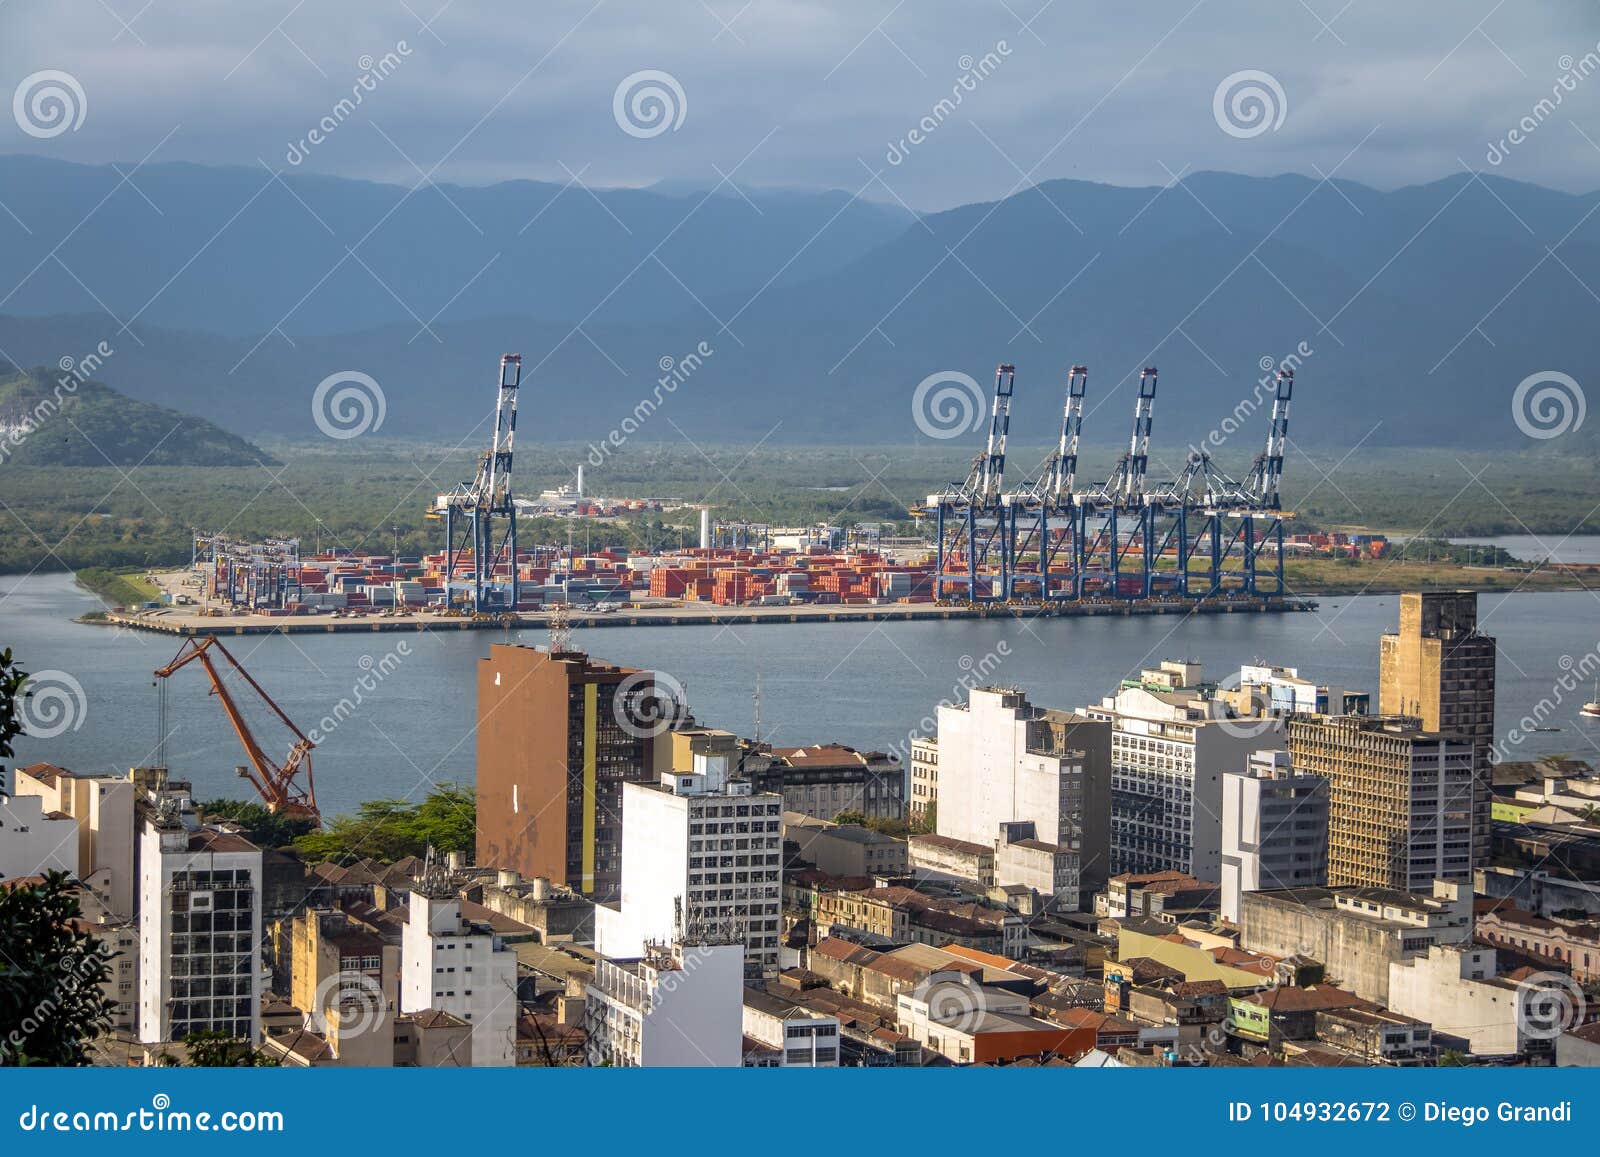 aerial view of port of santos and santos city - santos, sao paulo, brazil